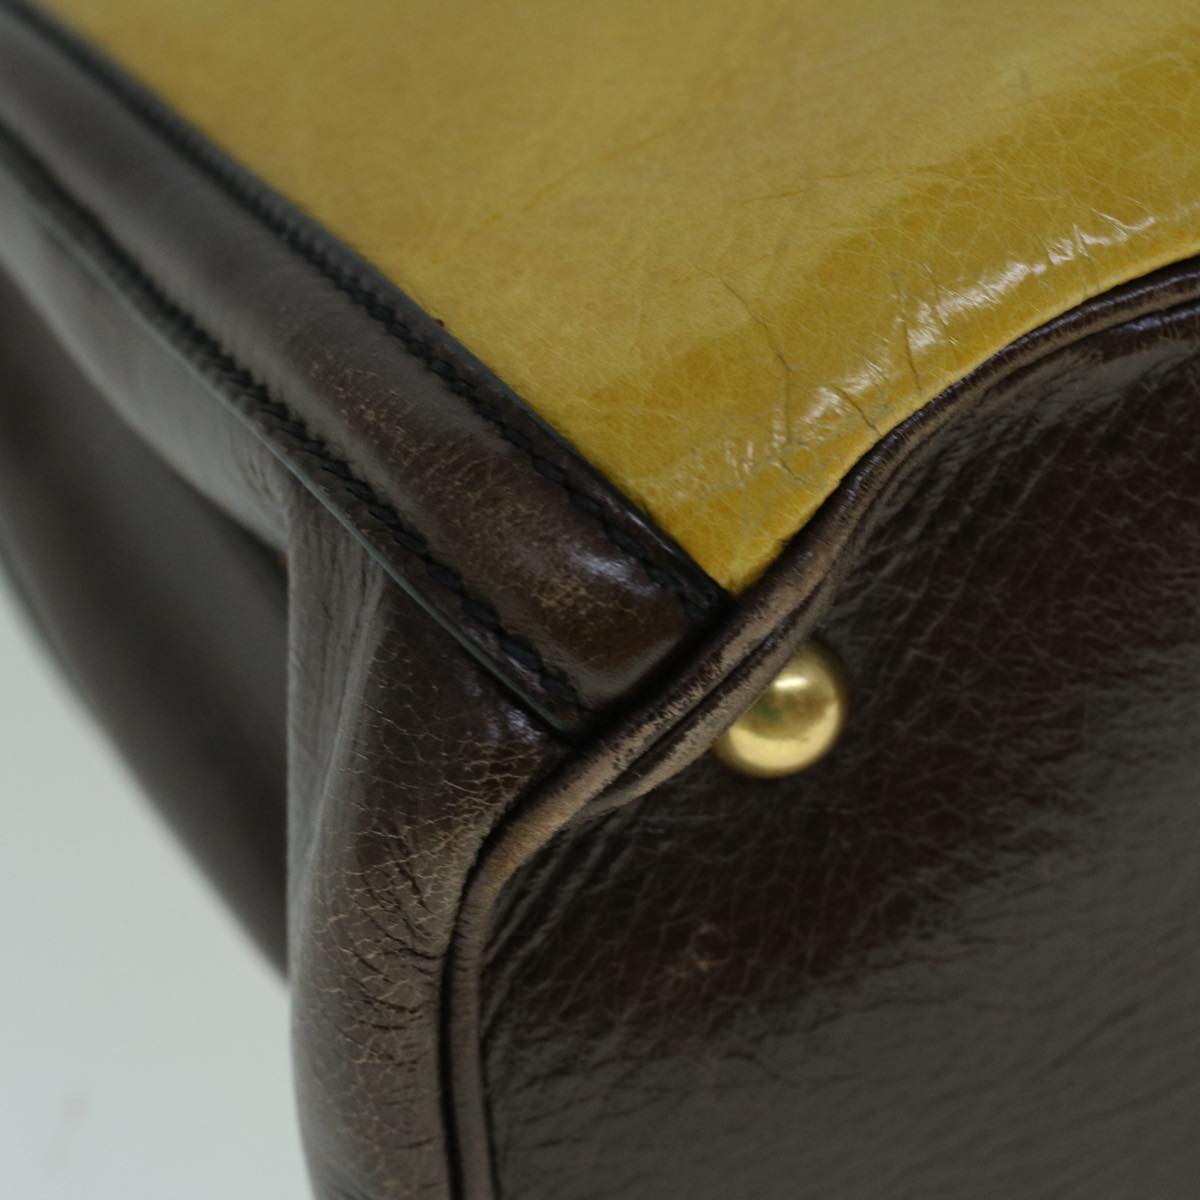 Miu Miu Shoulder Bag Vitello Shine Leather 2way Yellow Brown Auth bs8888